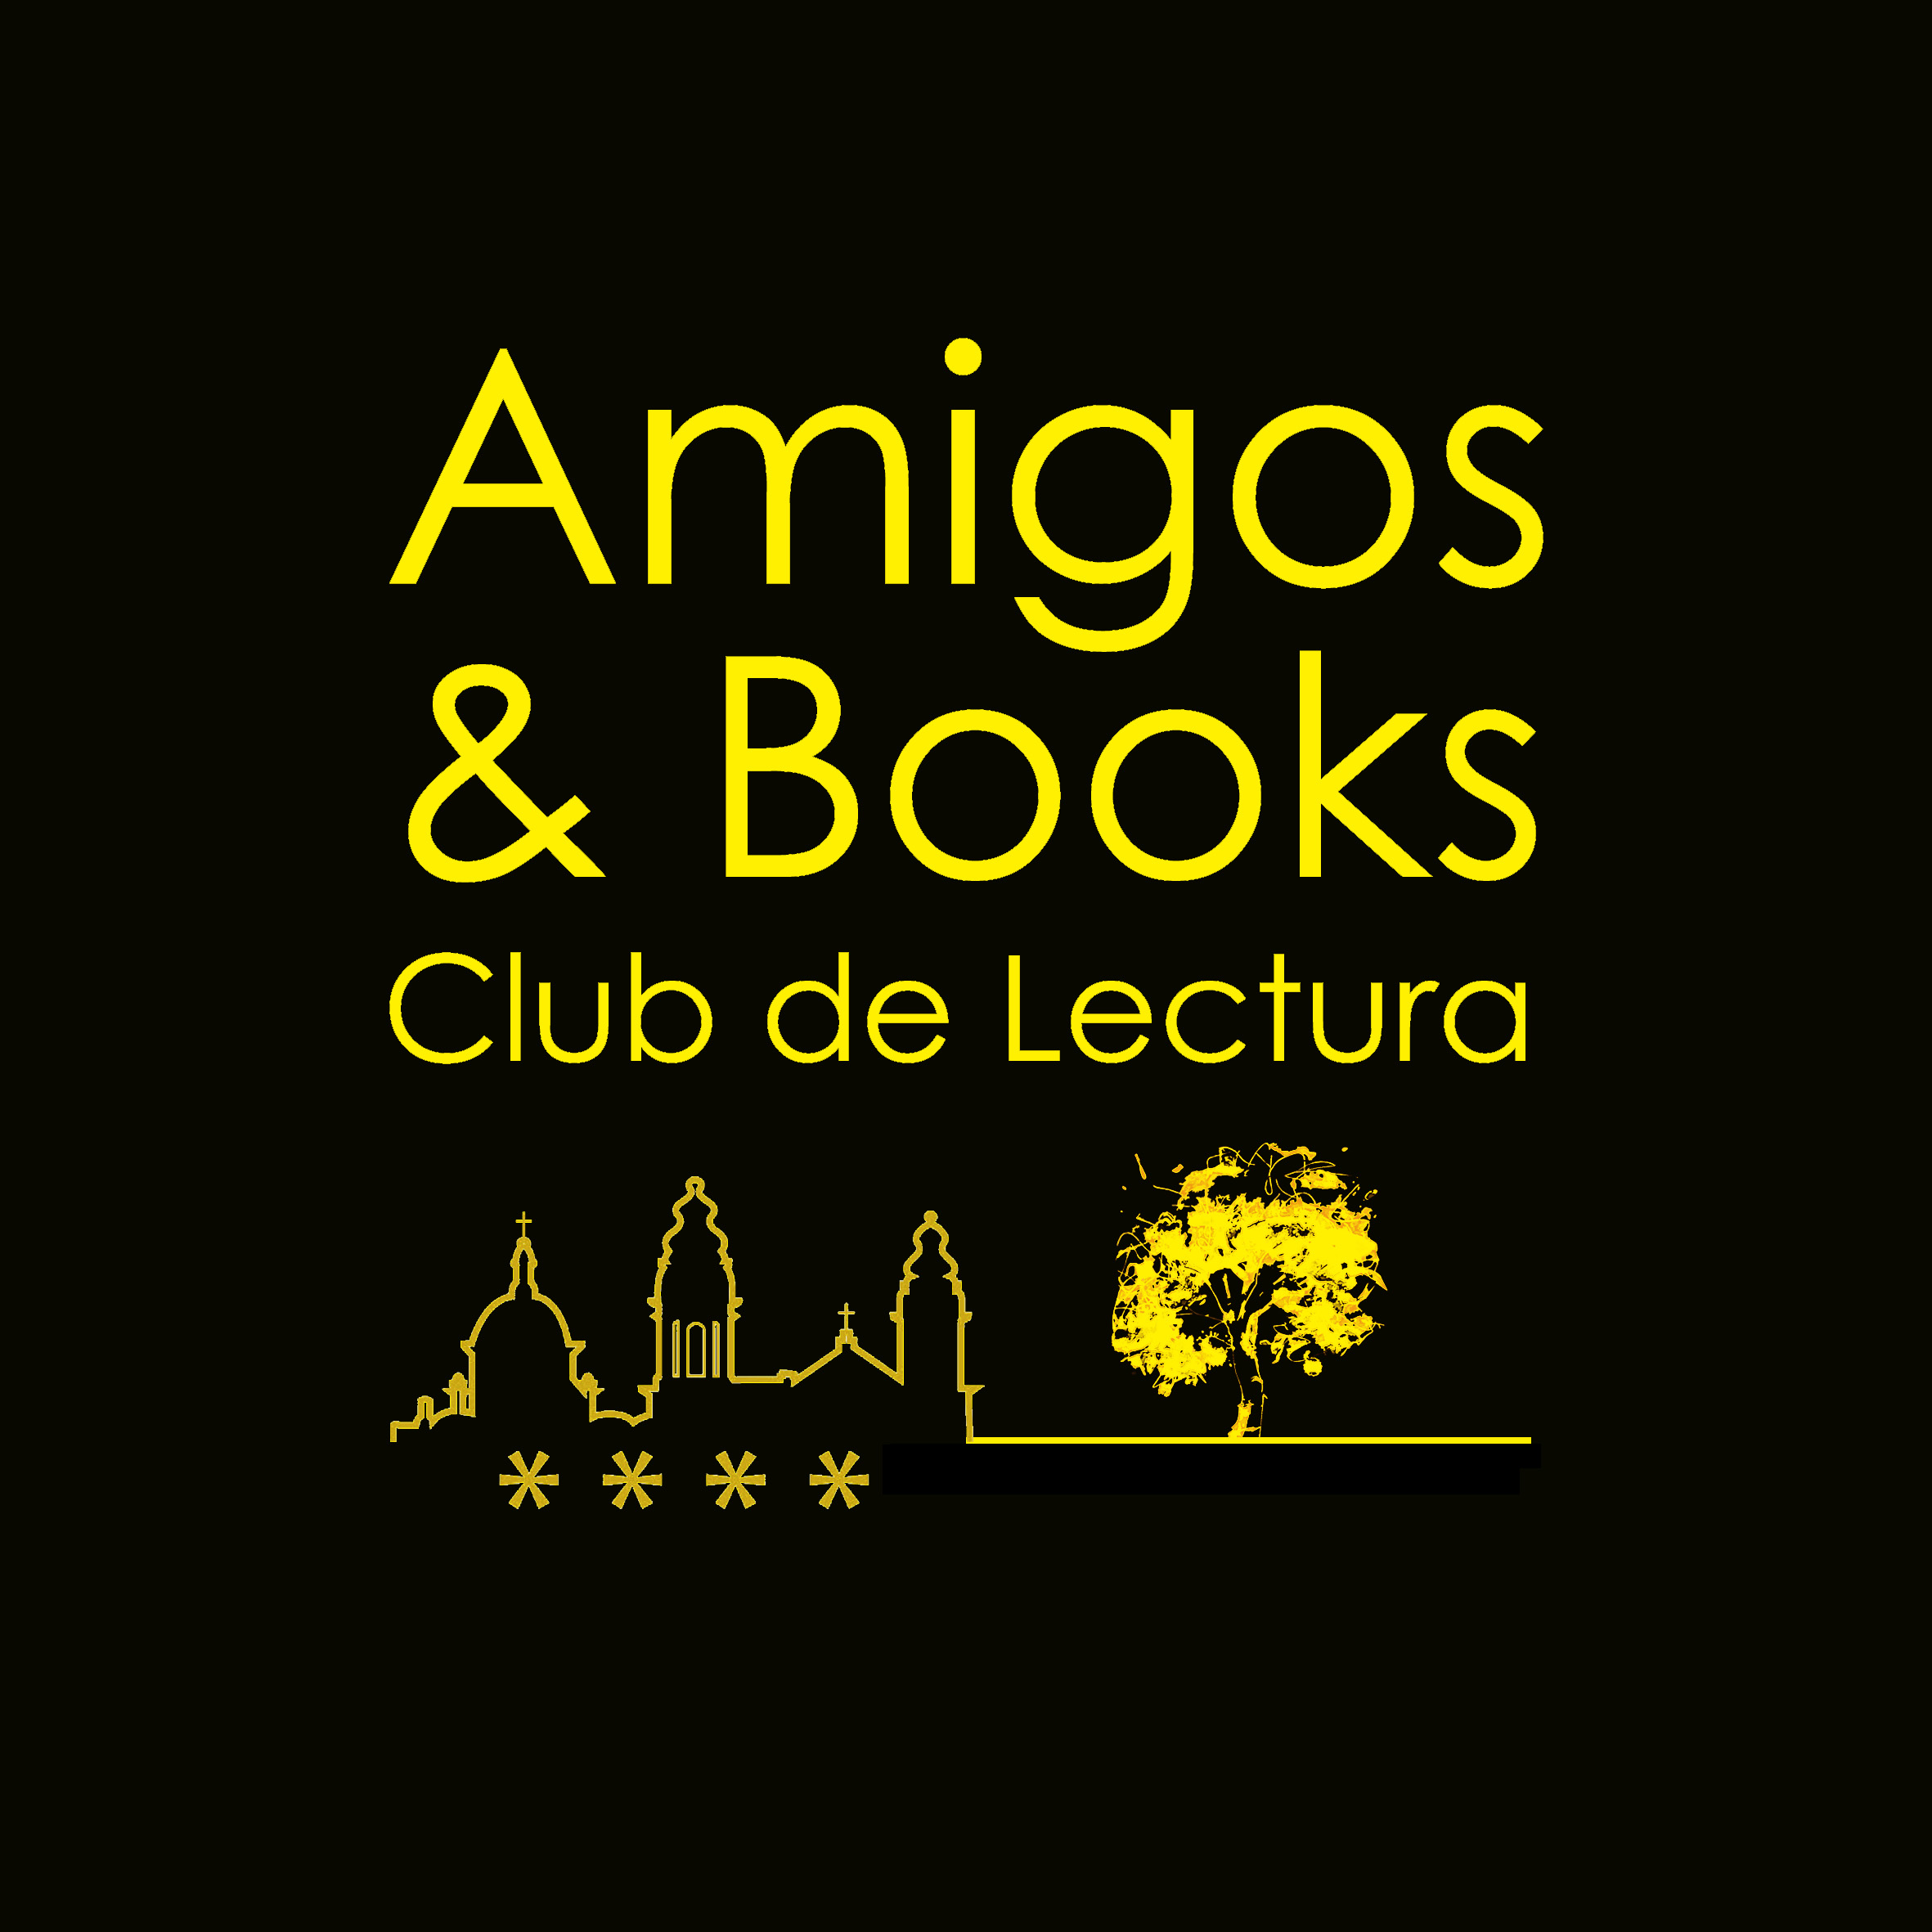 Amigos & Books - Club de Lectura